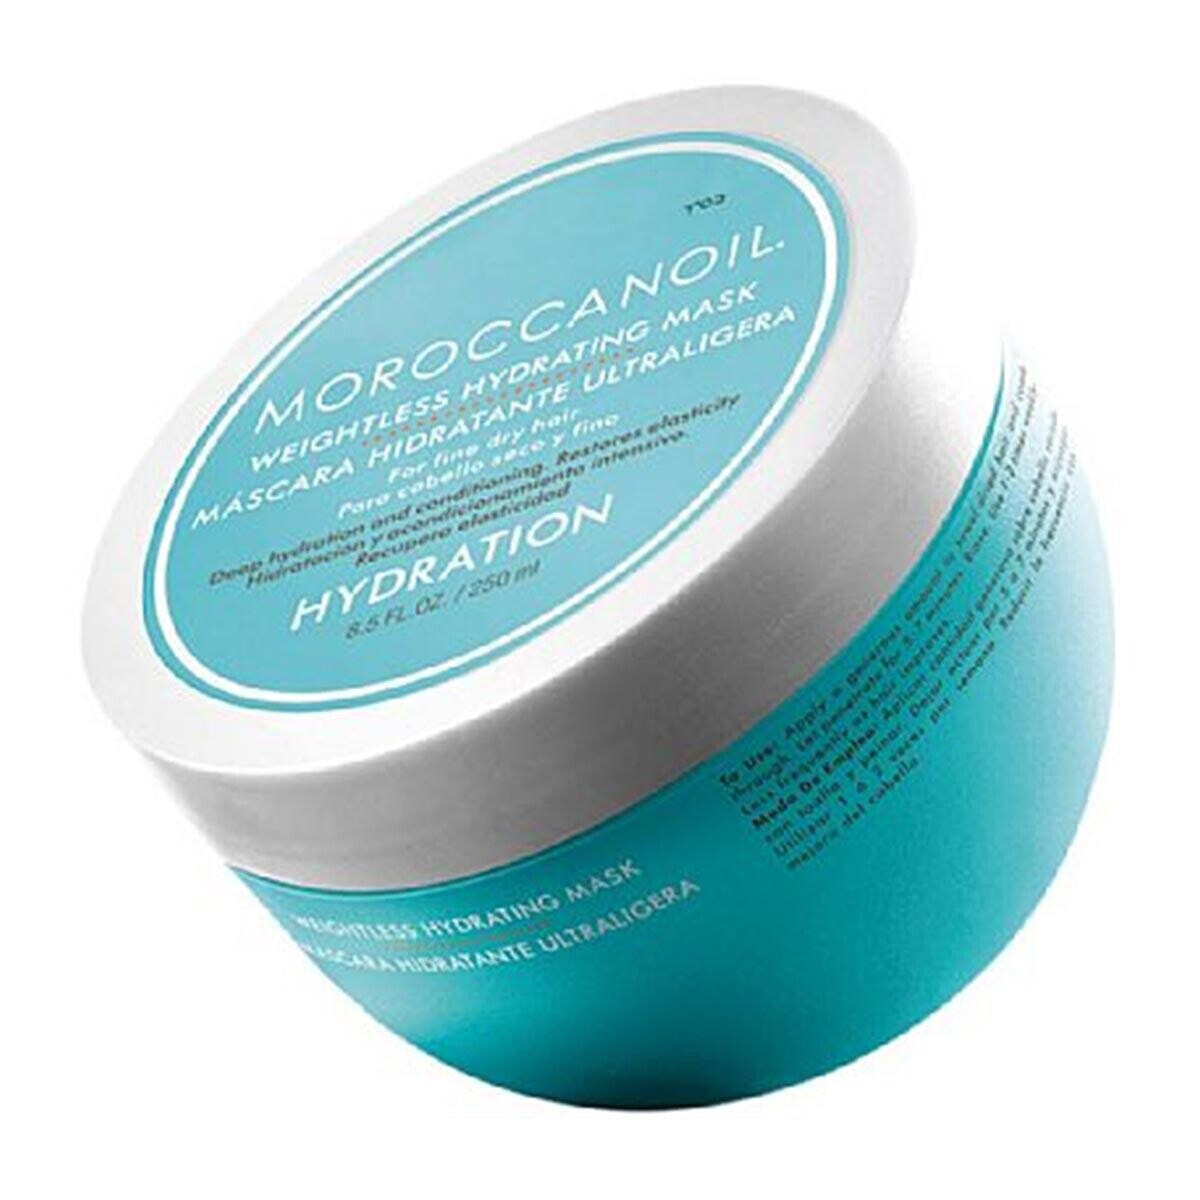 Маска для тонких волос Hydration Moroccanoil Ultralight (250 ml)